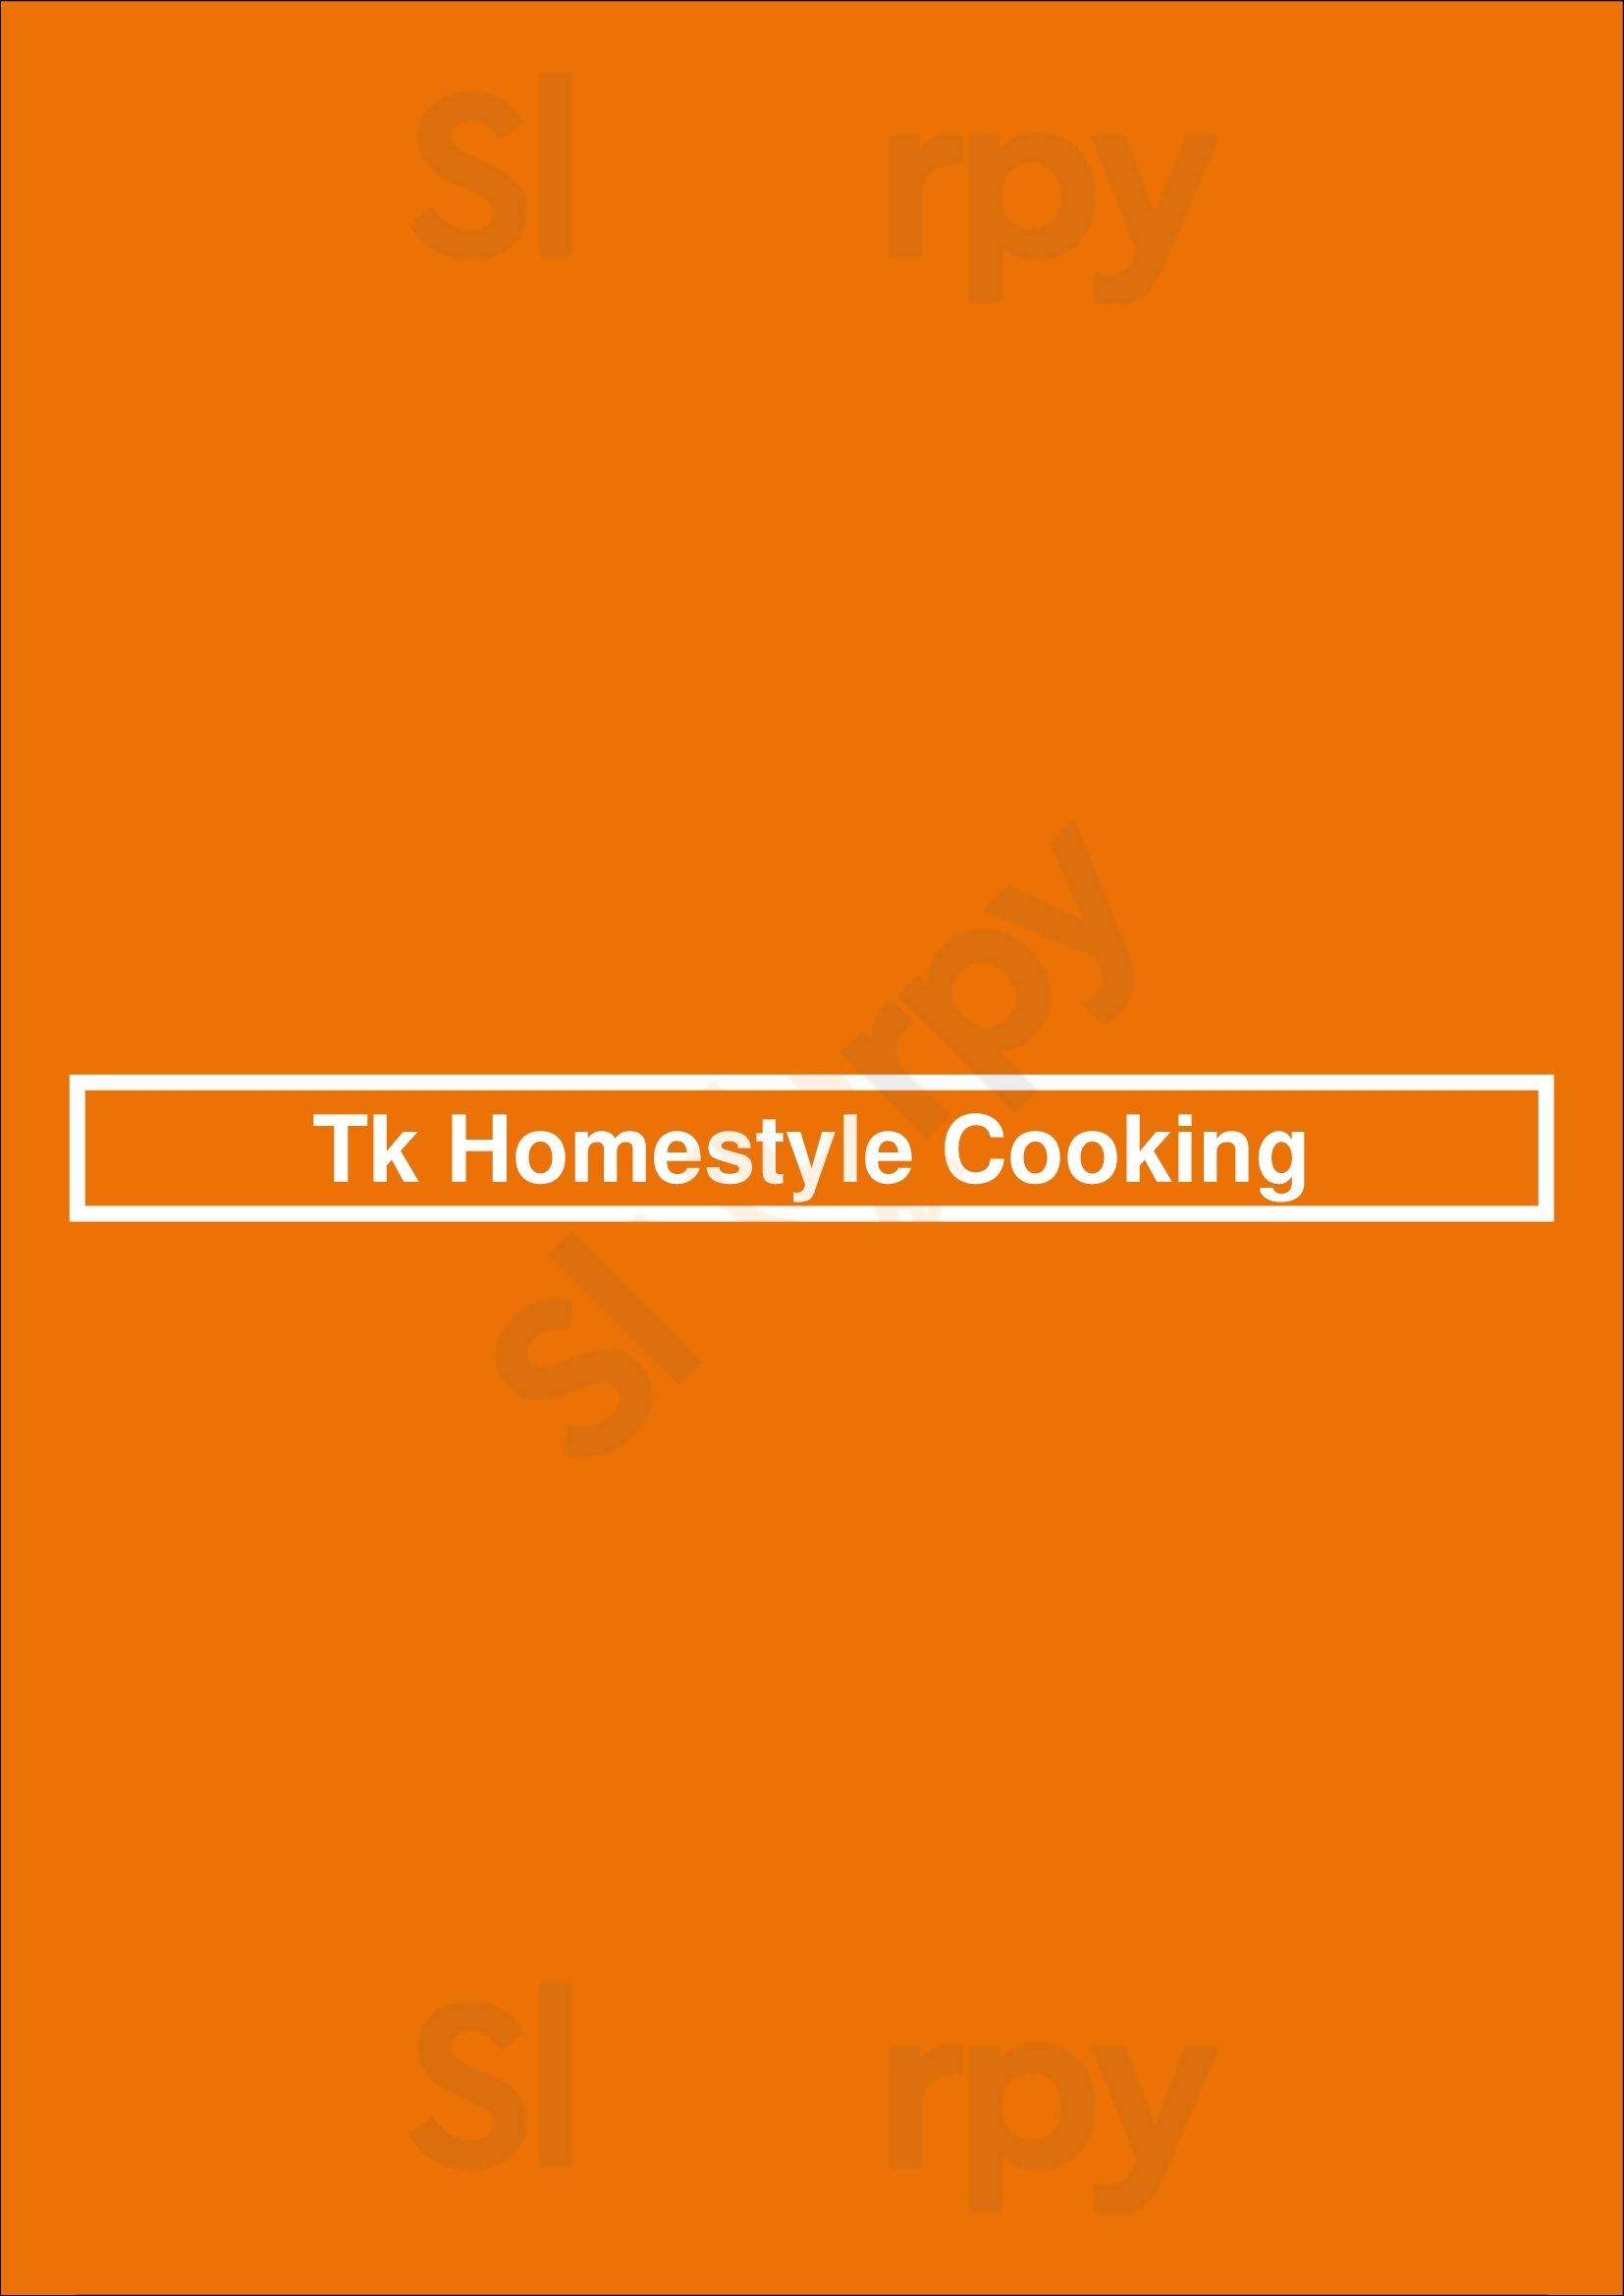 Tk Homestyle Cooking Philadelphia Menu - 1